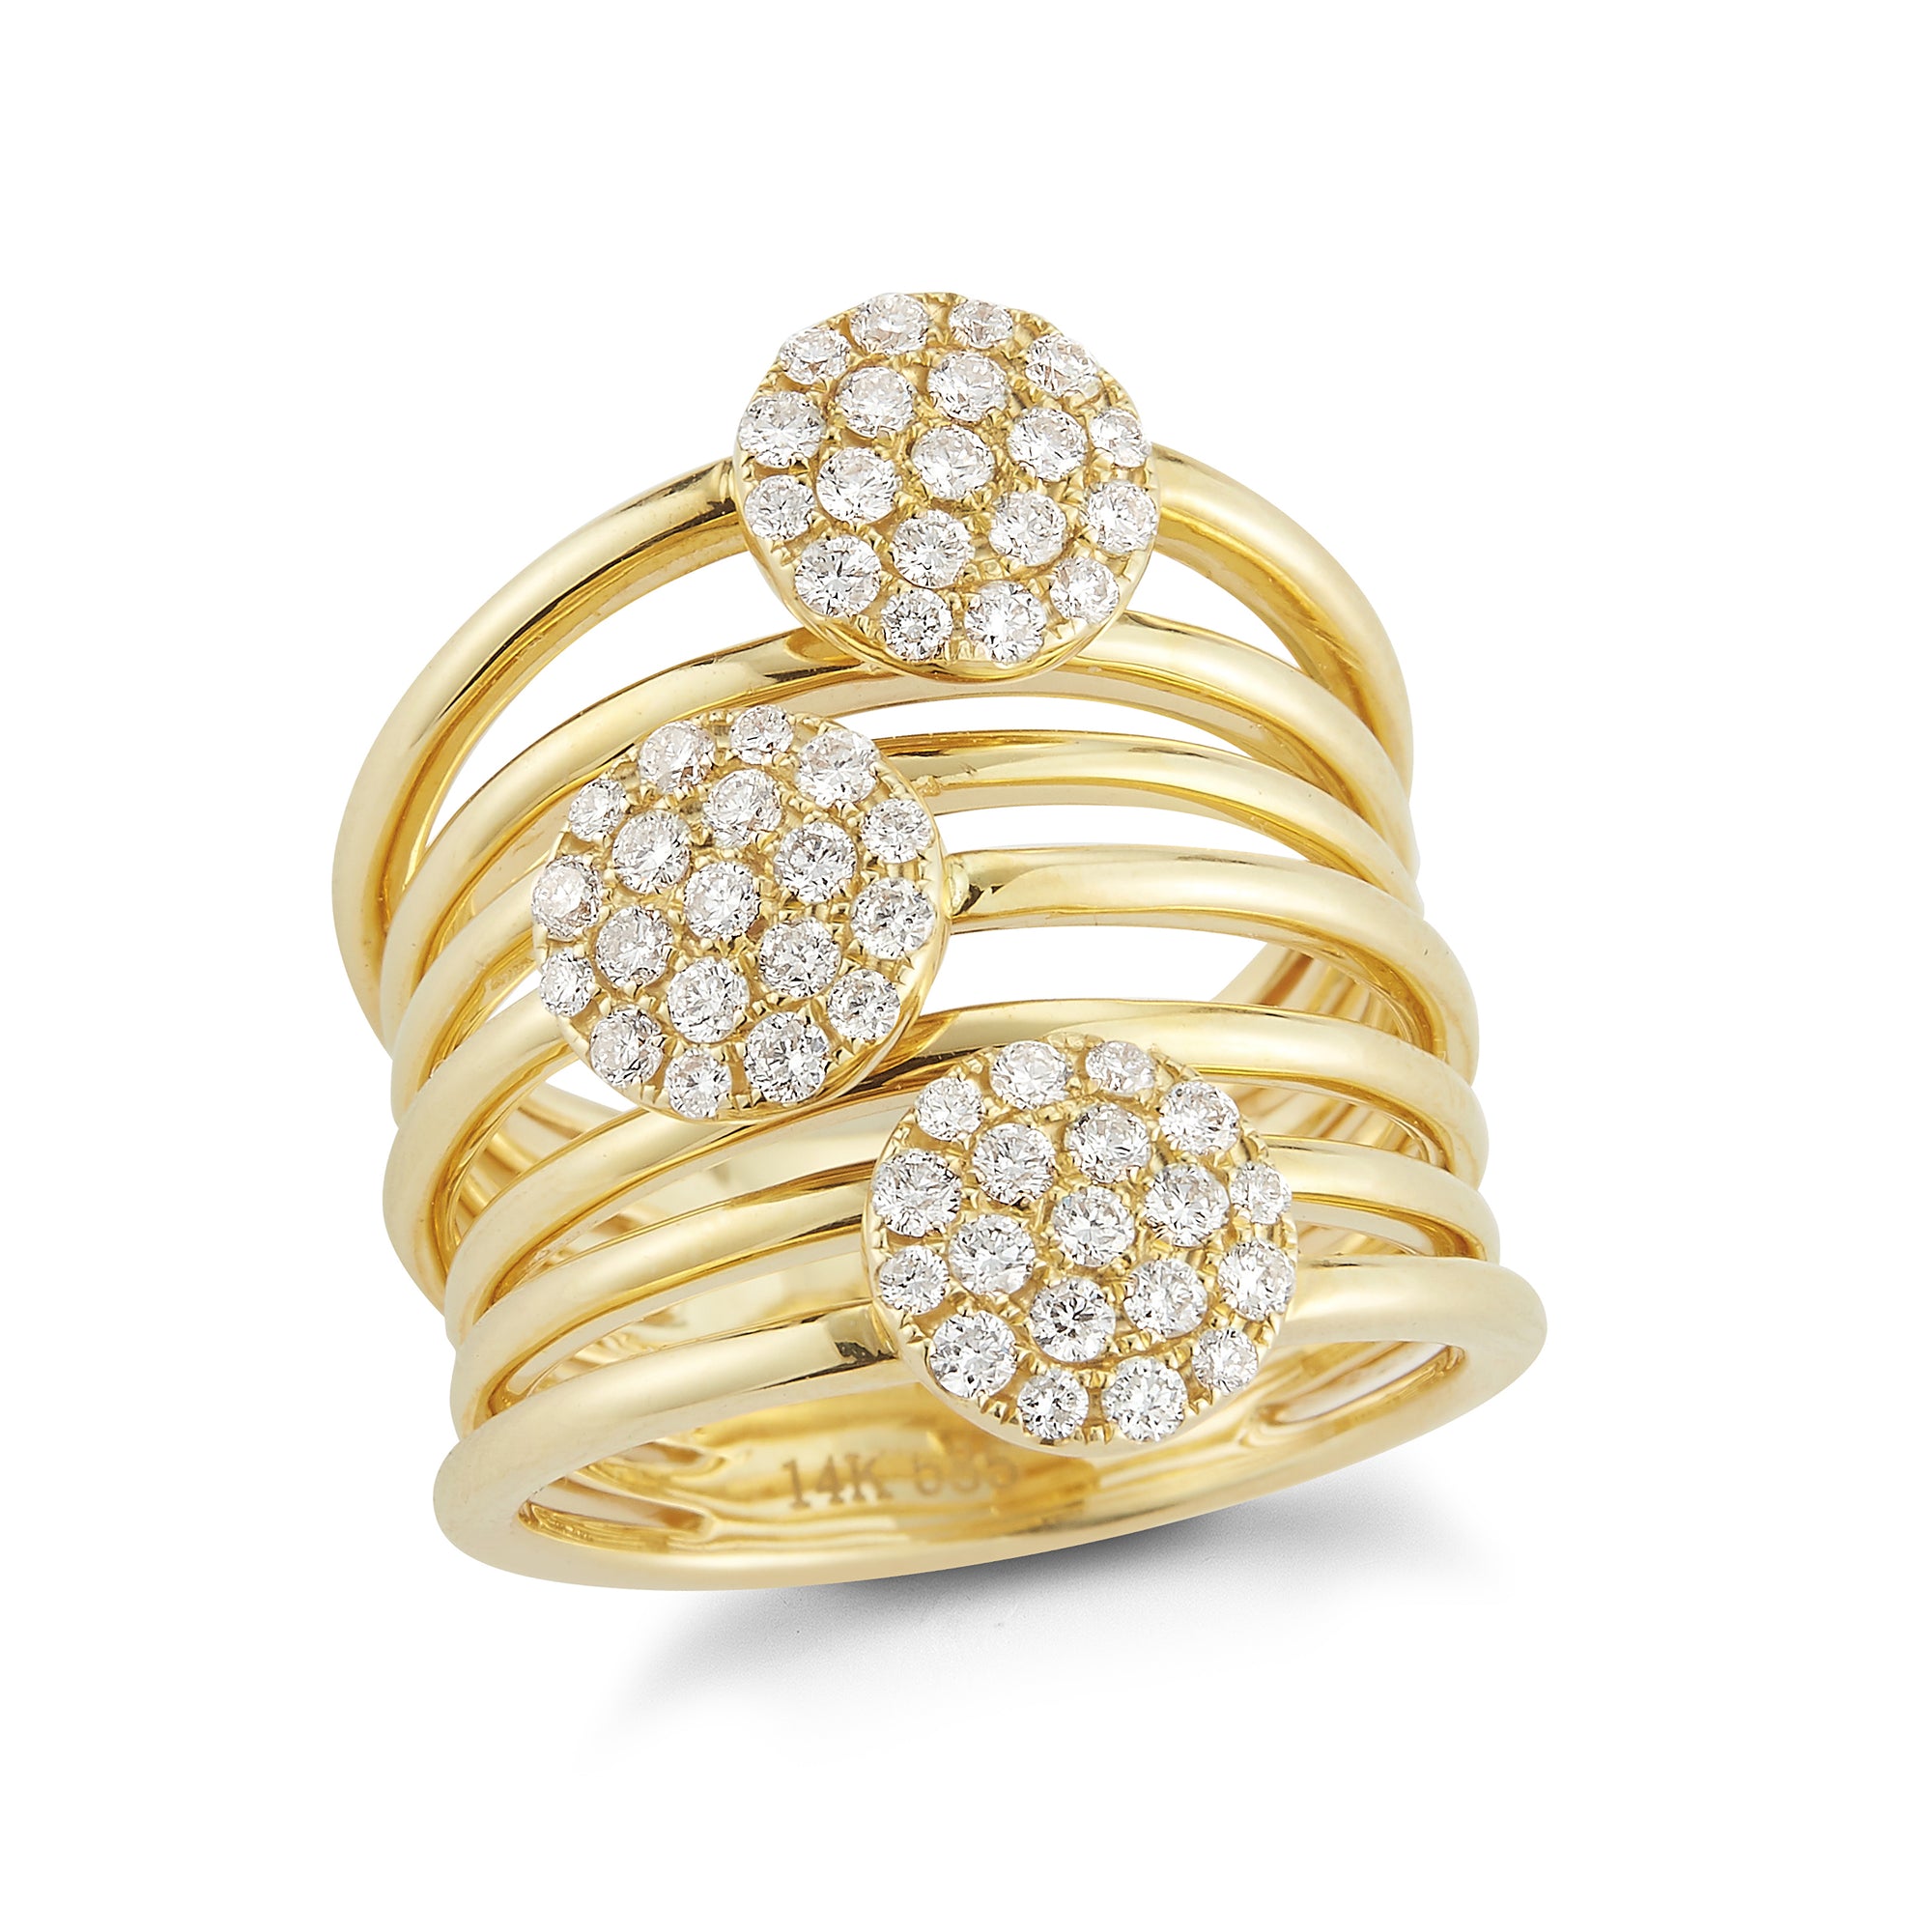 Multi Row Diamond Cluster Ring  14k gold, 12.24 grams, 57 round diamonds .82 carats.  Size width 24 millimeters.